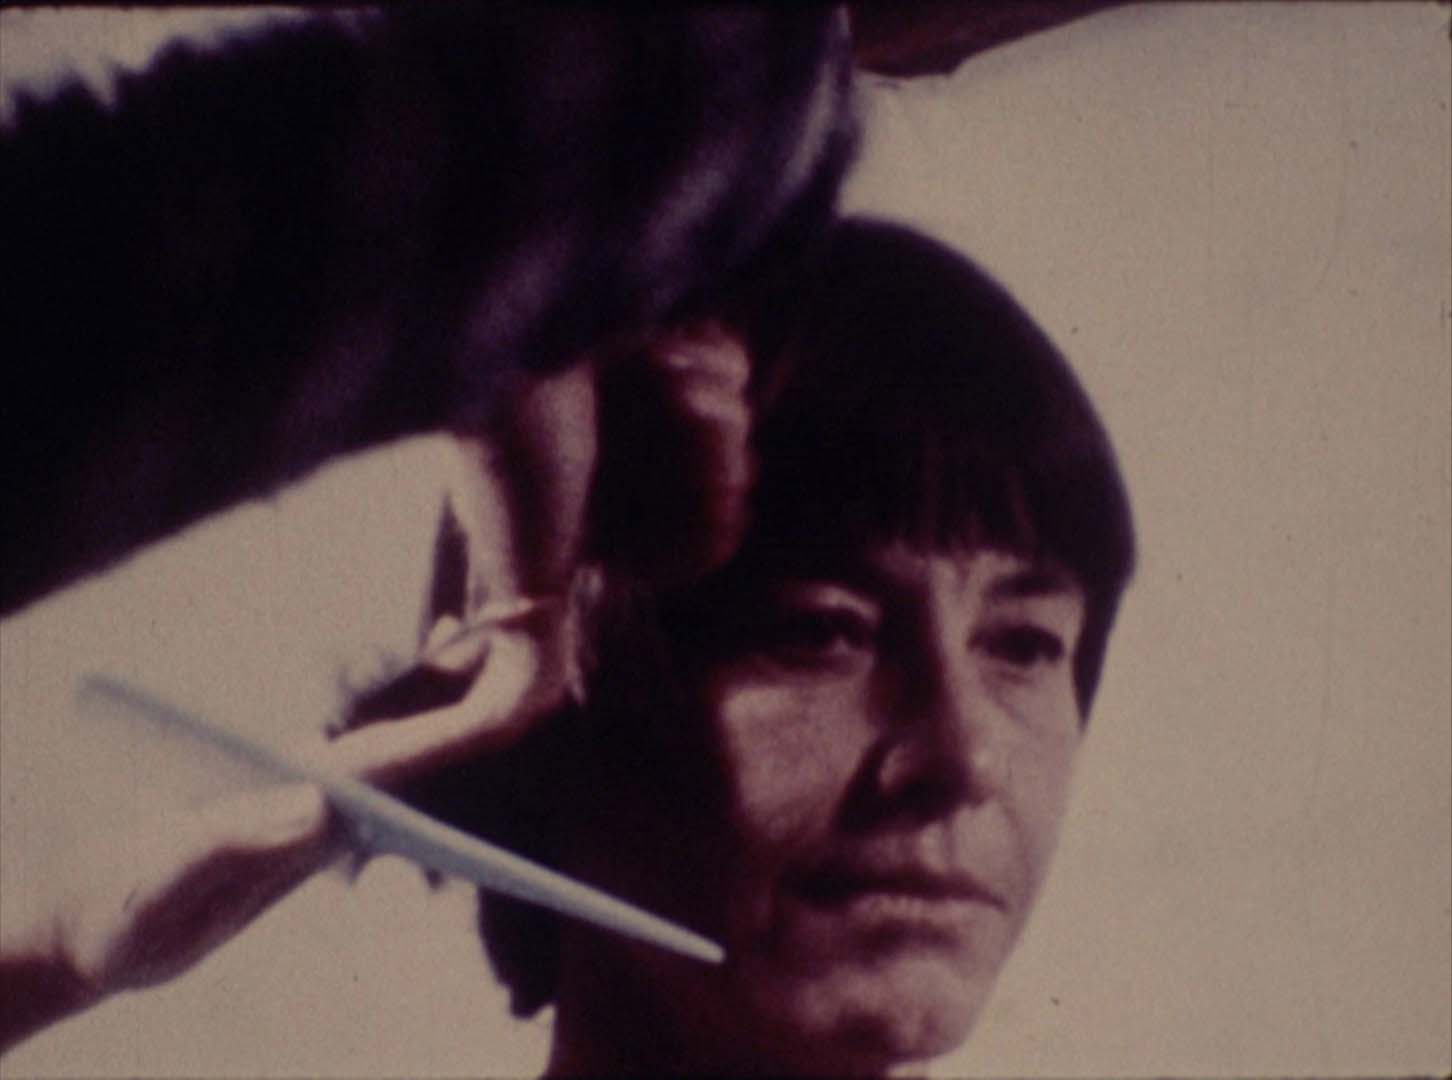 Still from Haircut - film by Barbara Hammer